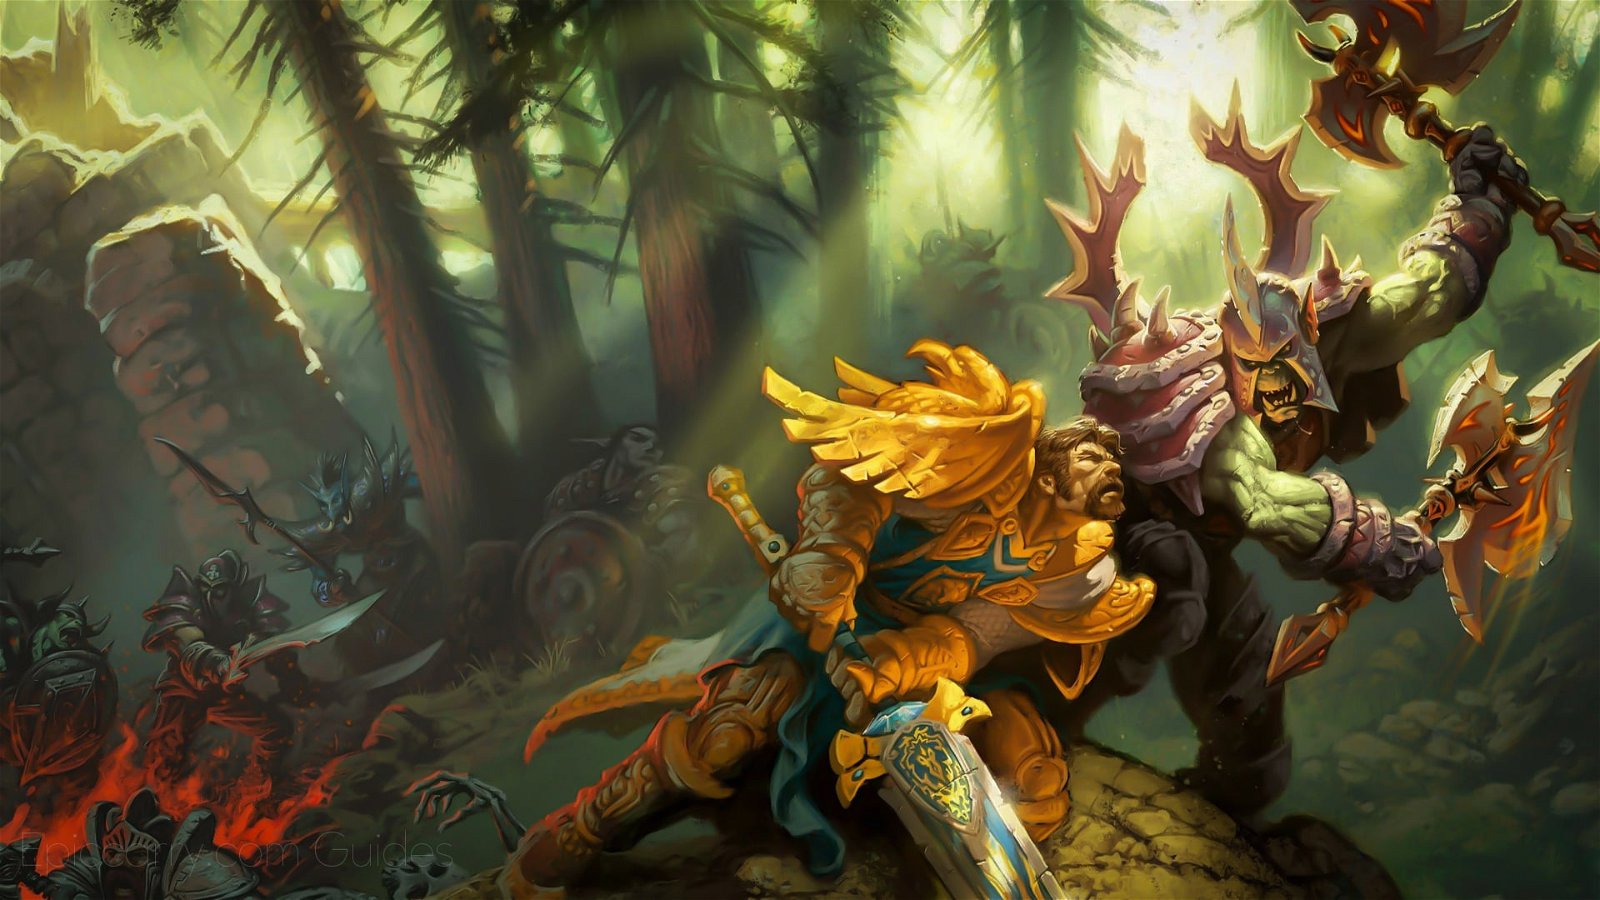 8.3 - Season 4 PVP Rewards, World of Warcraft